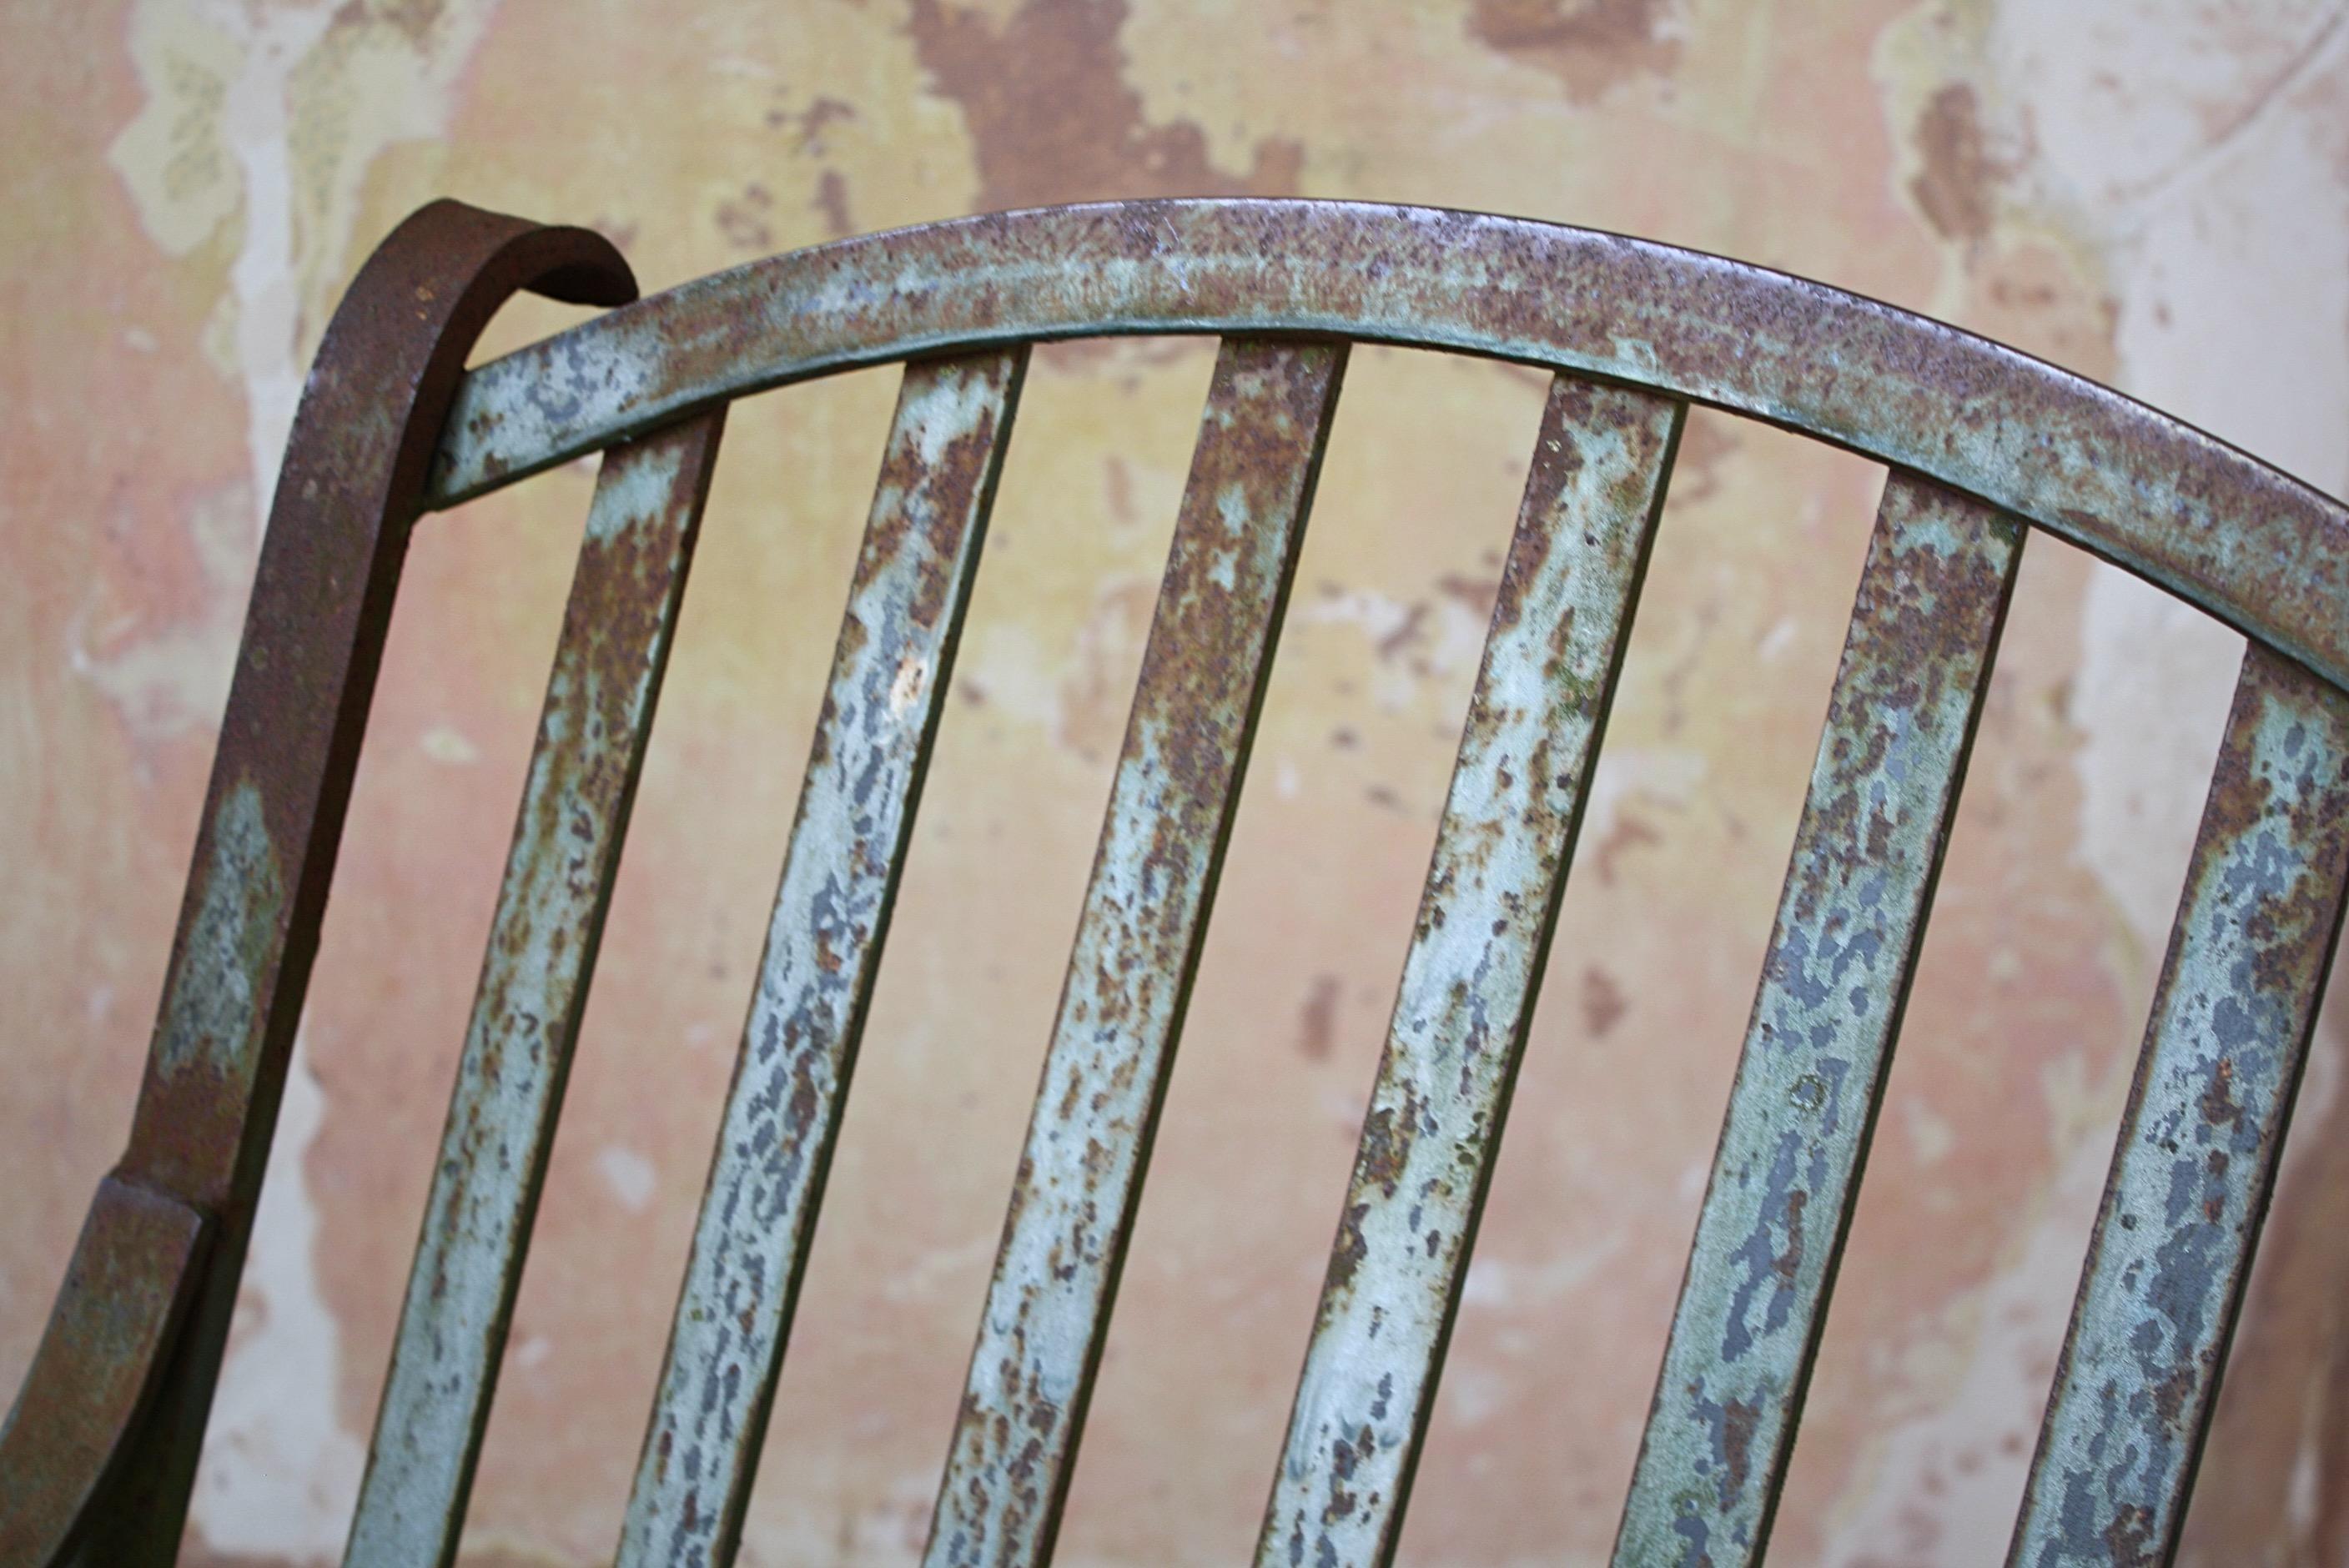 iron rocking chair